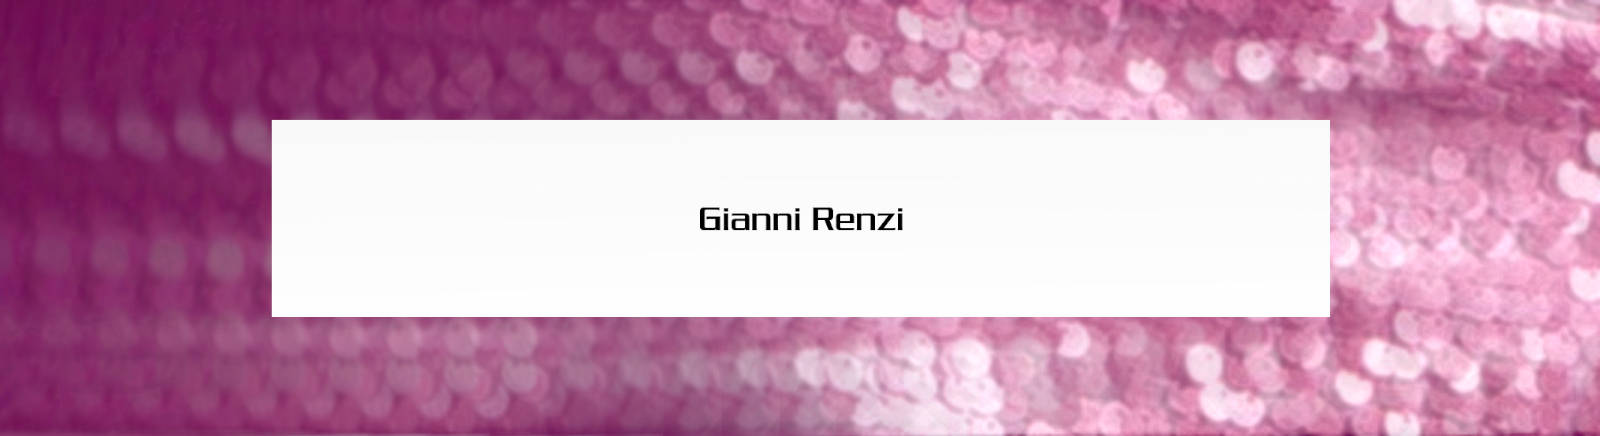 Gianni Renzi Markenschuhe online bestellen im Prange Schuhe Shop